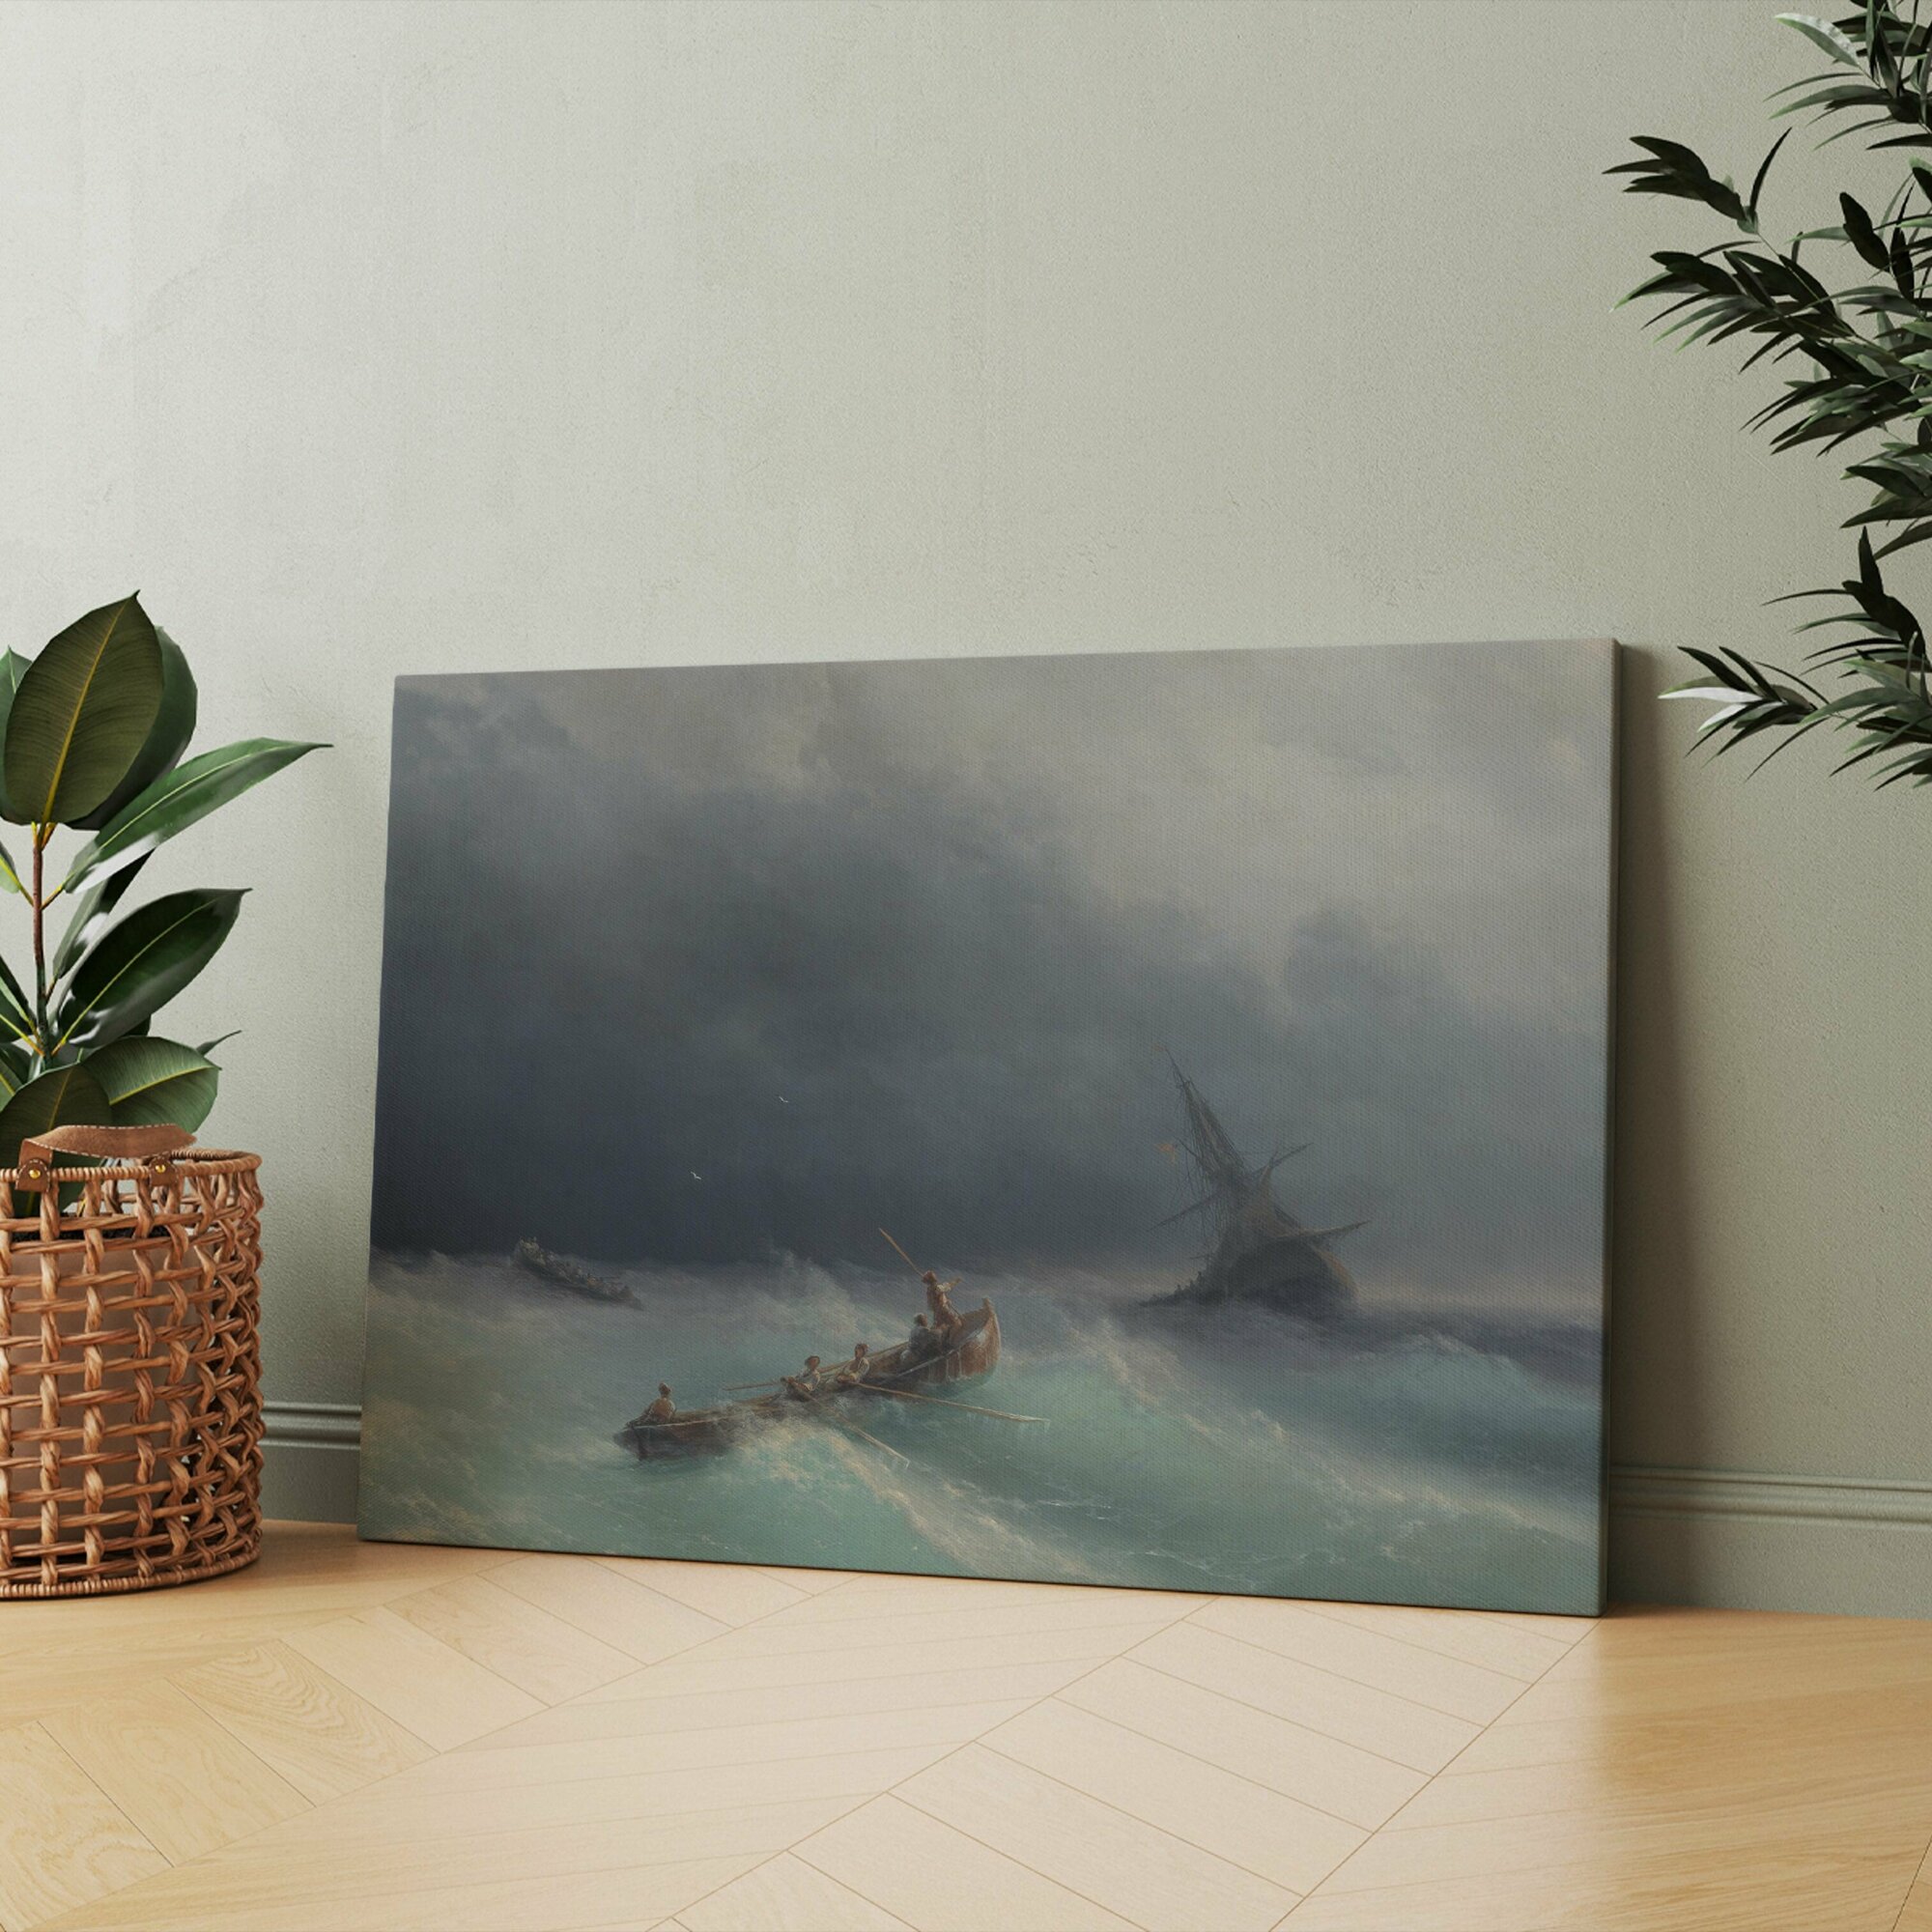 Картина на холсте (айвазовского шторм иван константинович буря 1872) 40x60 см, для интерьера, в комнату, на стену, в подарок